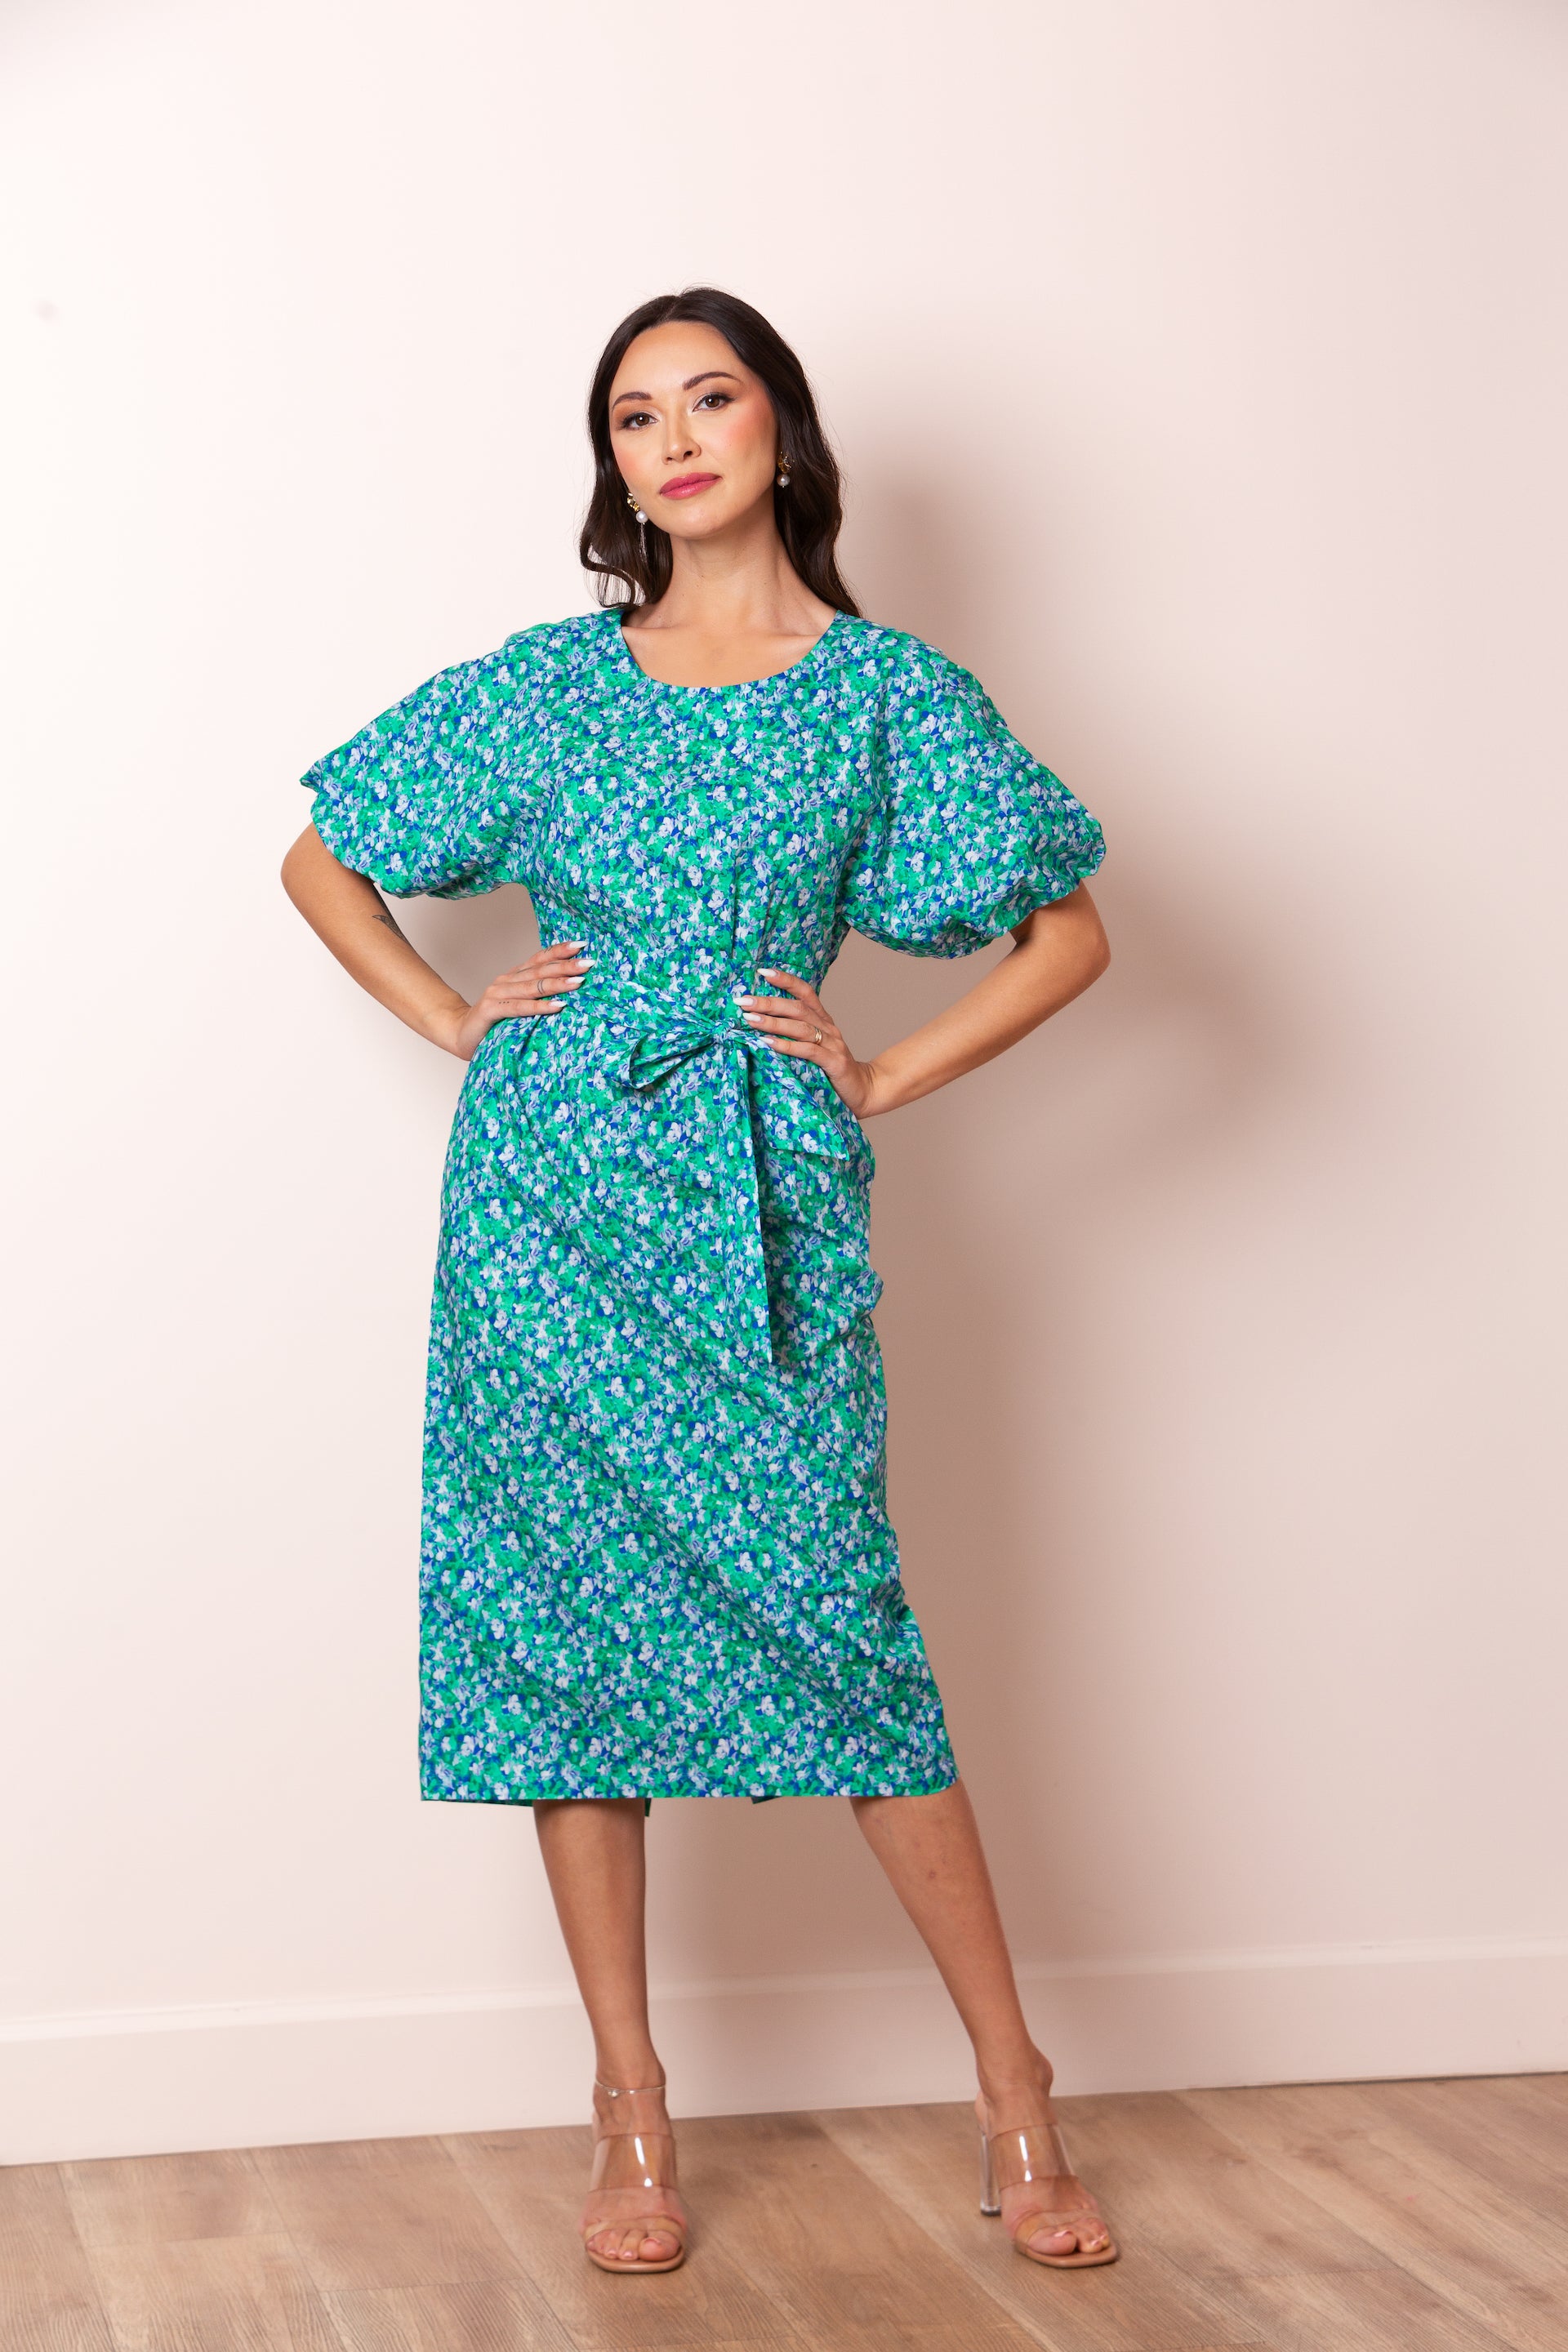 Ellie Kimono Sleeve Floral Print Dress in Green